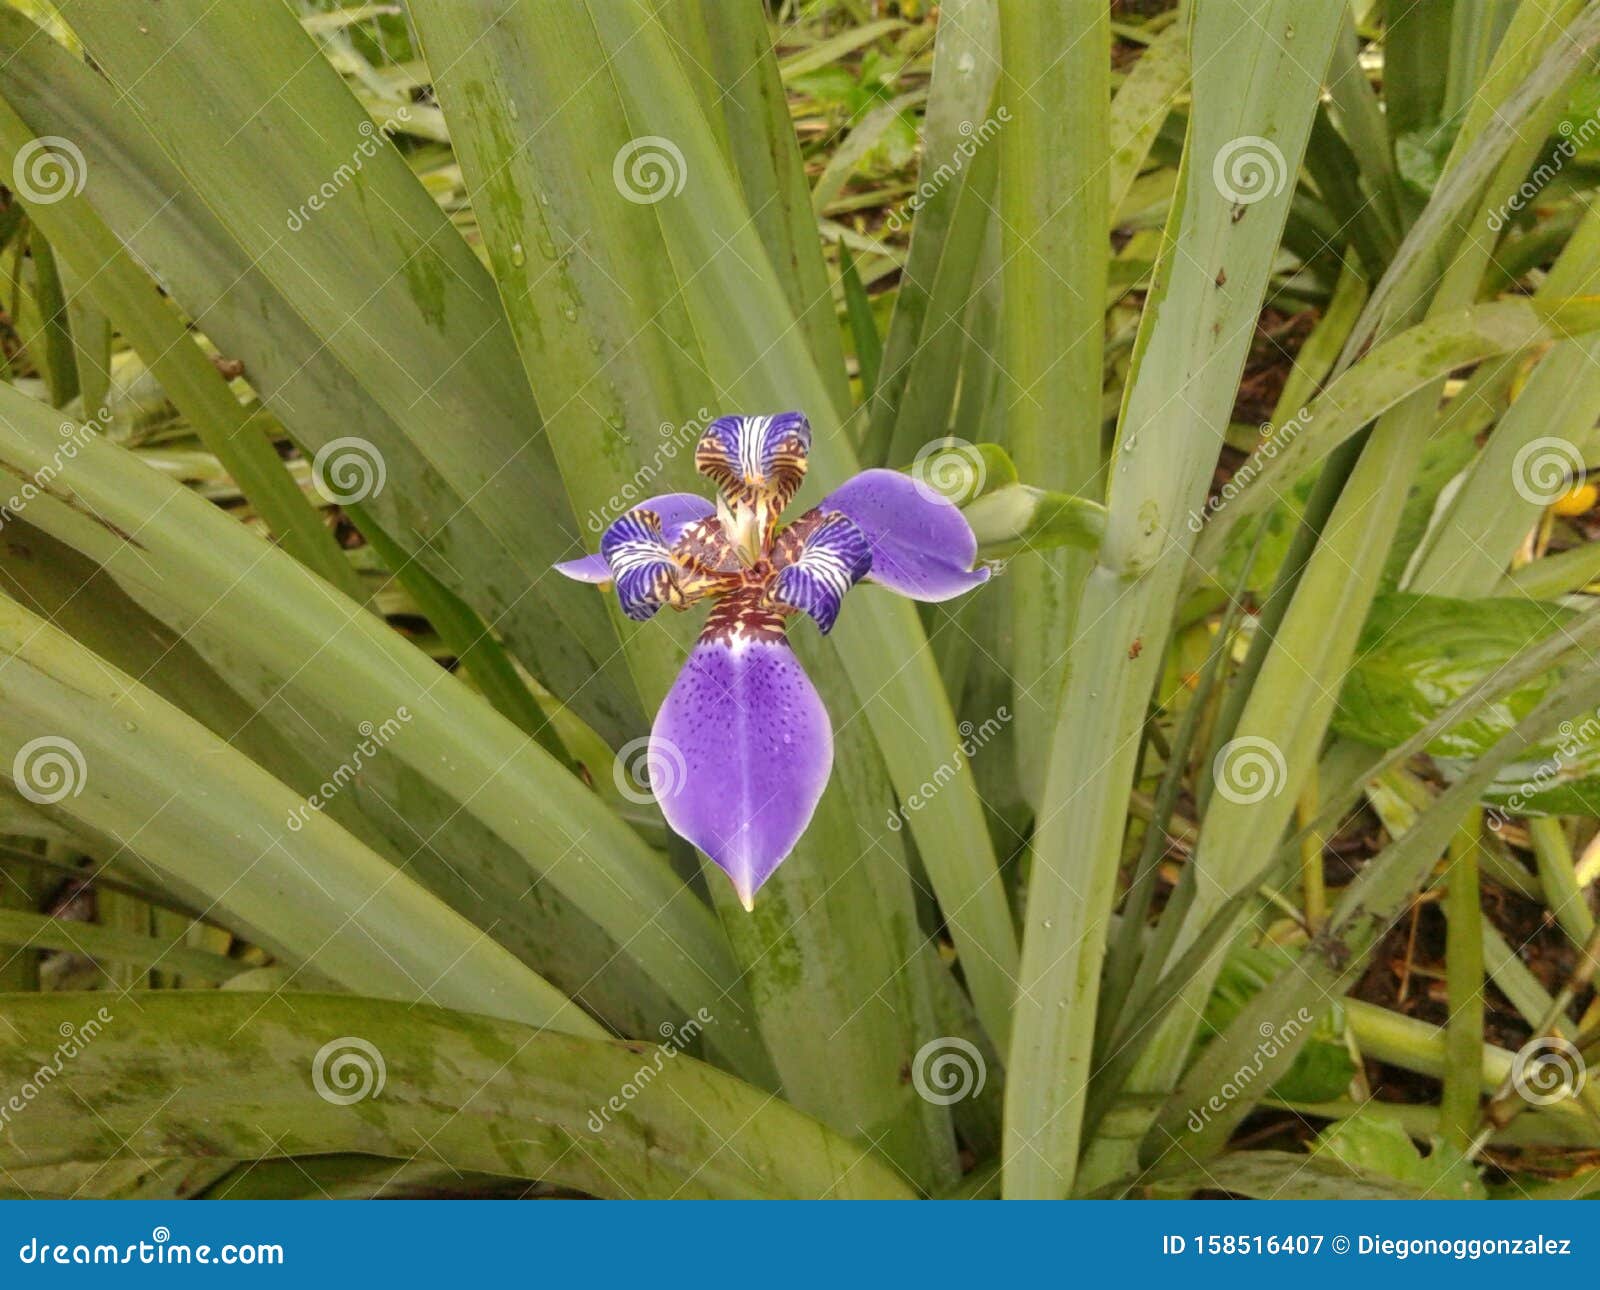 purple trimezia flower - walking iris - nature - garden - plants